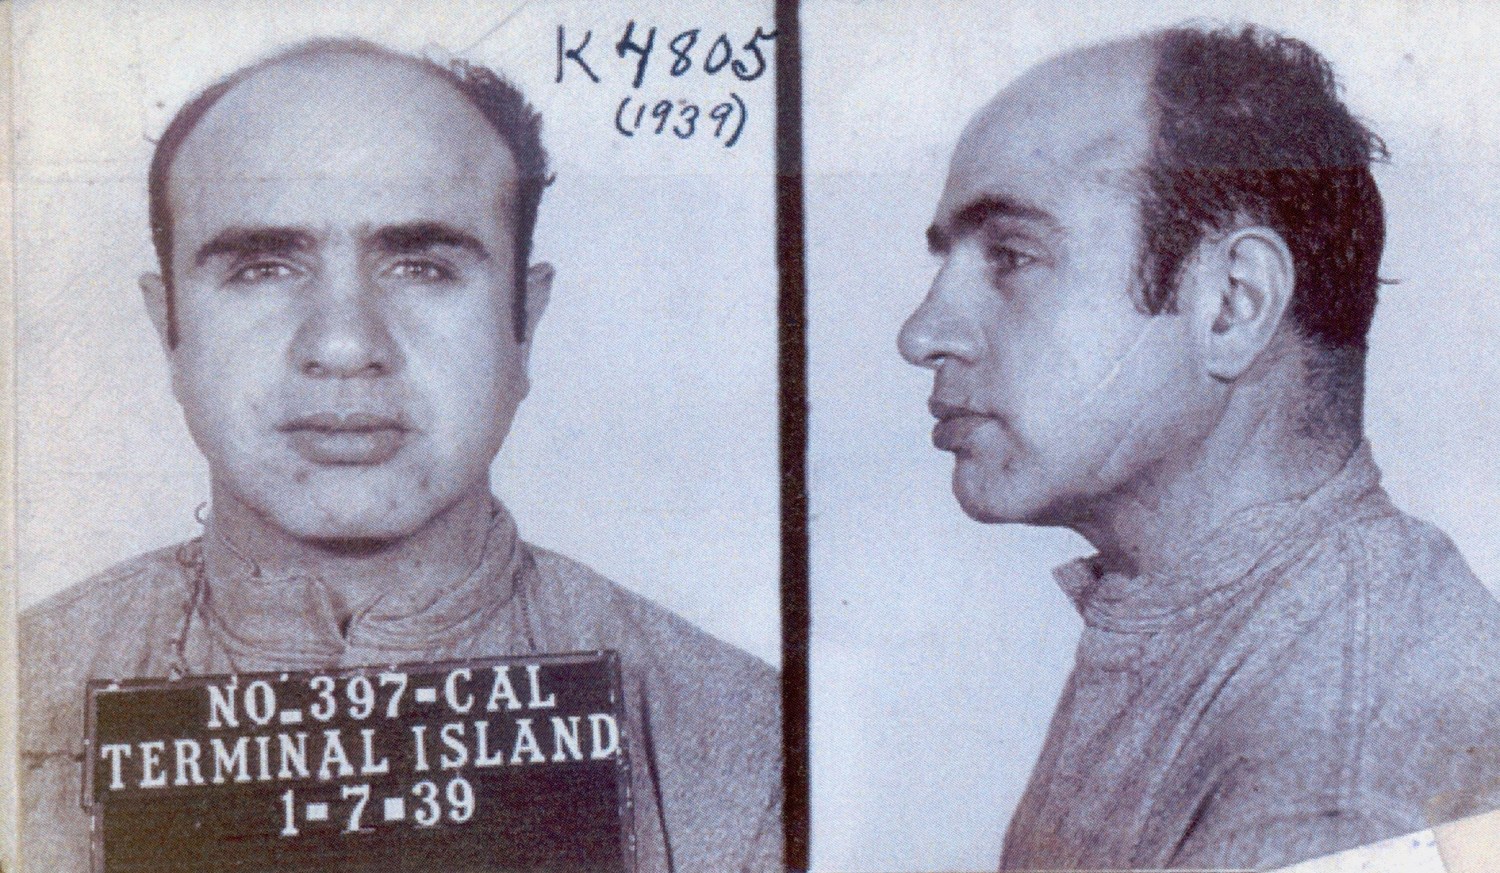 Al Capone's Death: A Brutal Mobster's Last Days